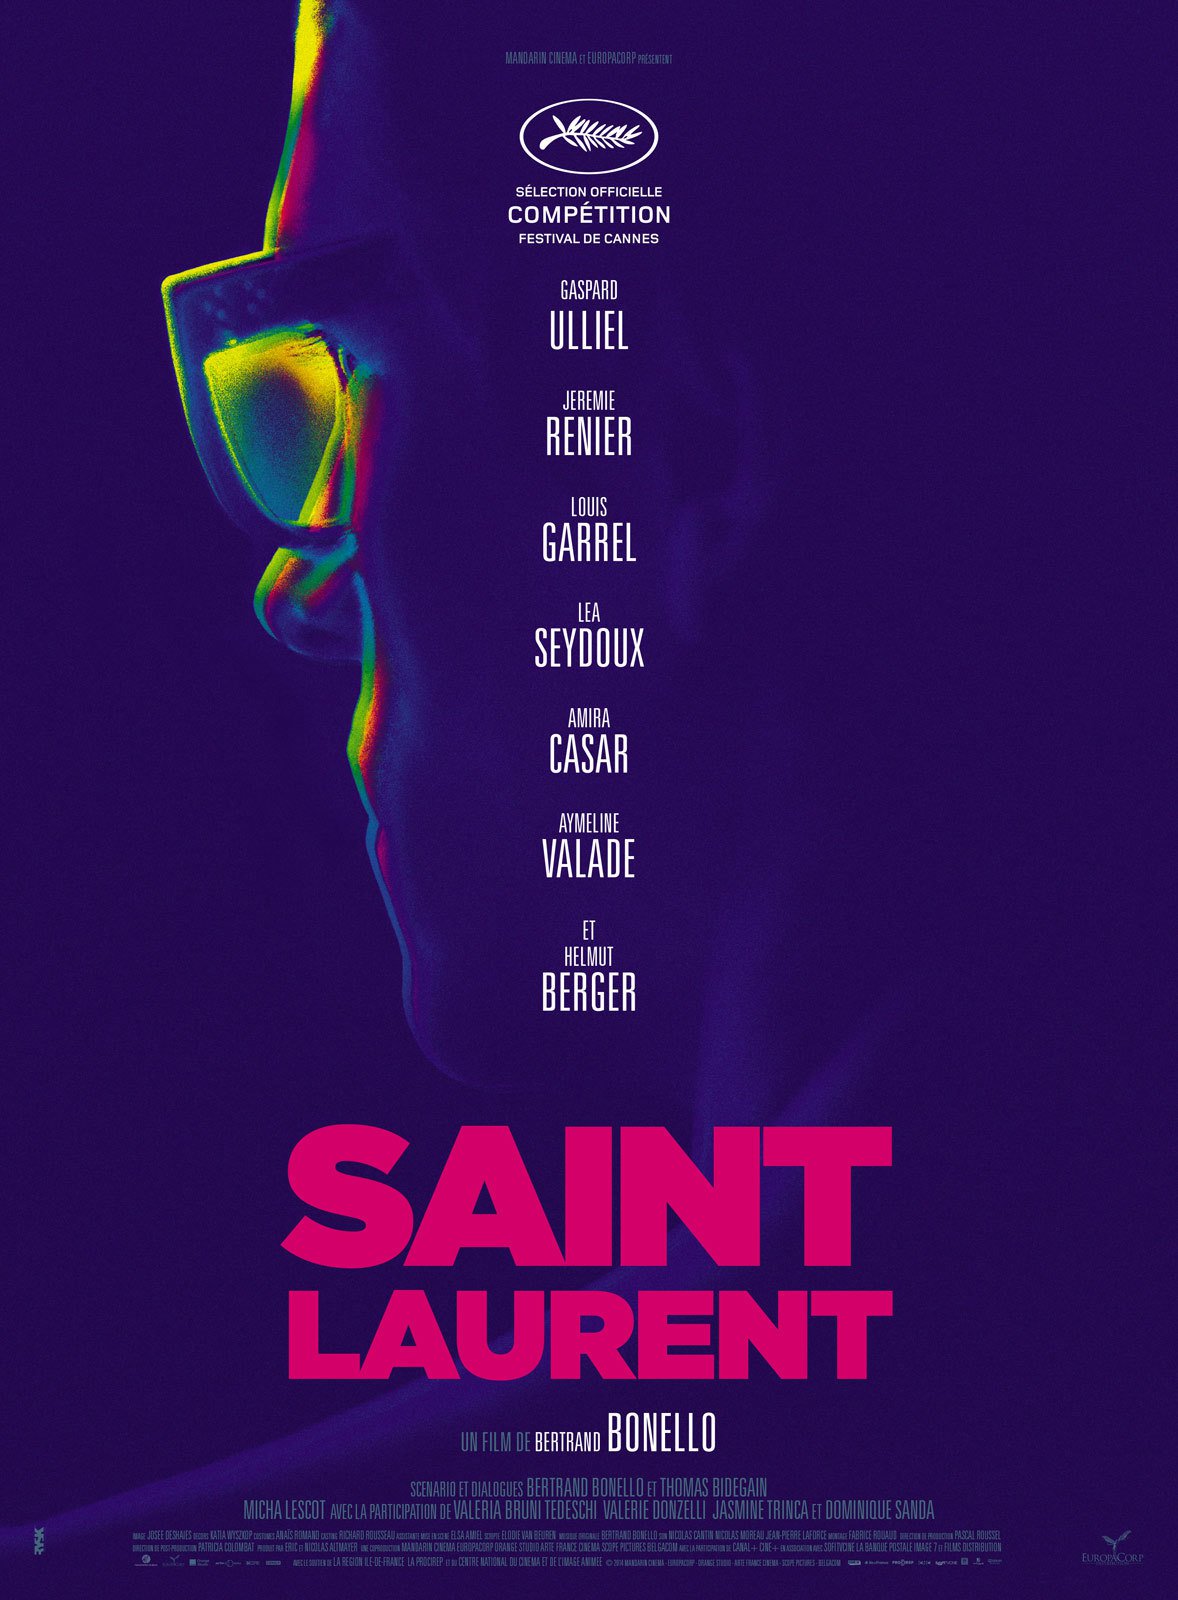 Plakat von "Saint Laurent"